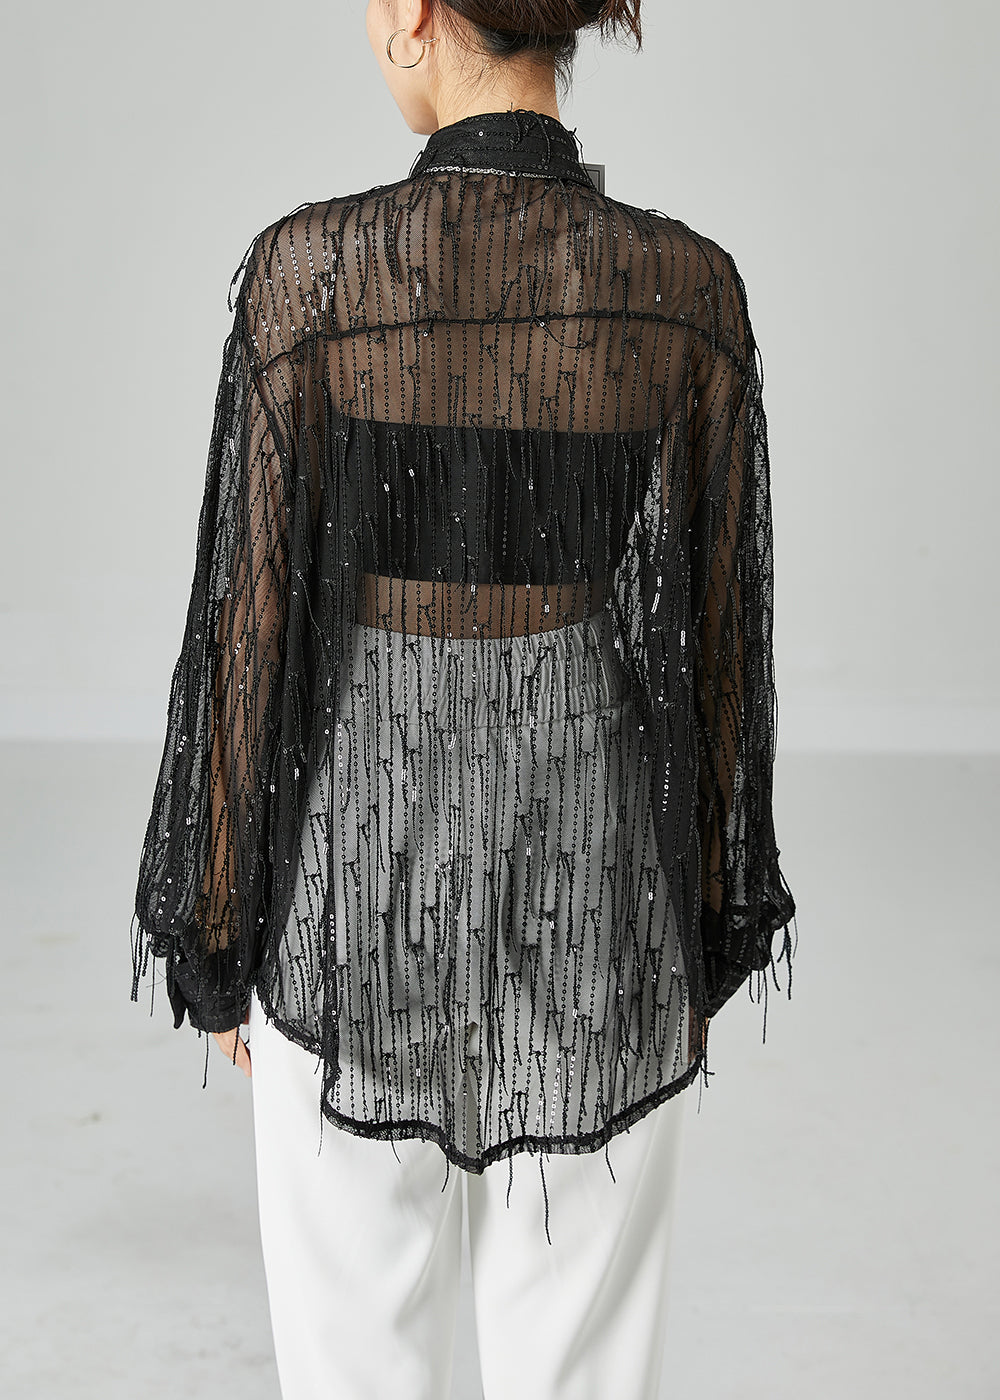 Modern Black Sequins Tassel Hollow Out Tulle Shirt Top Summer